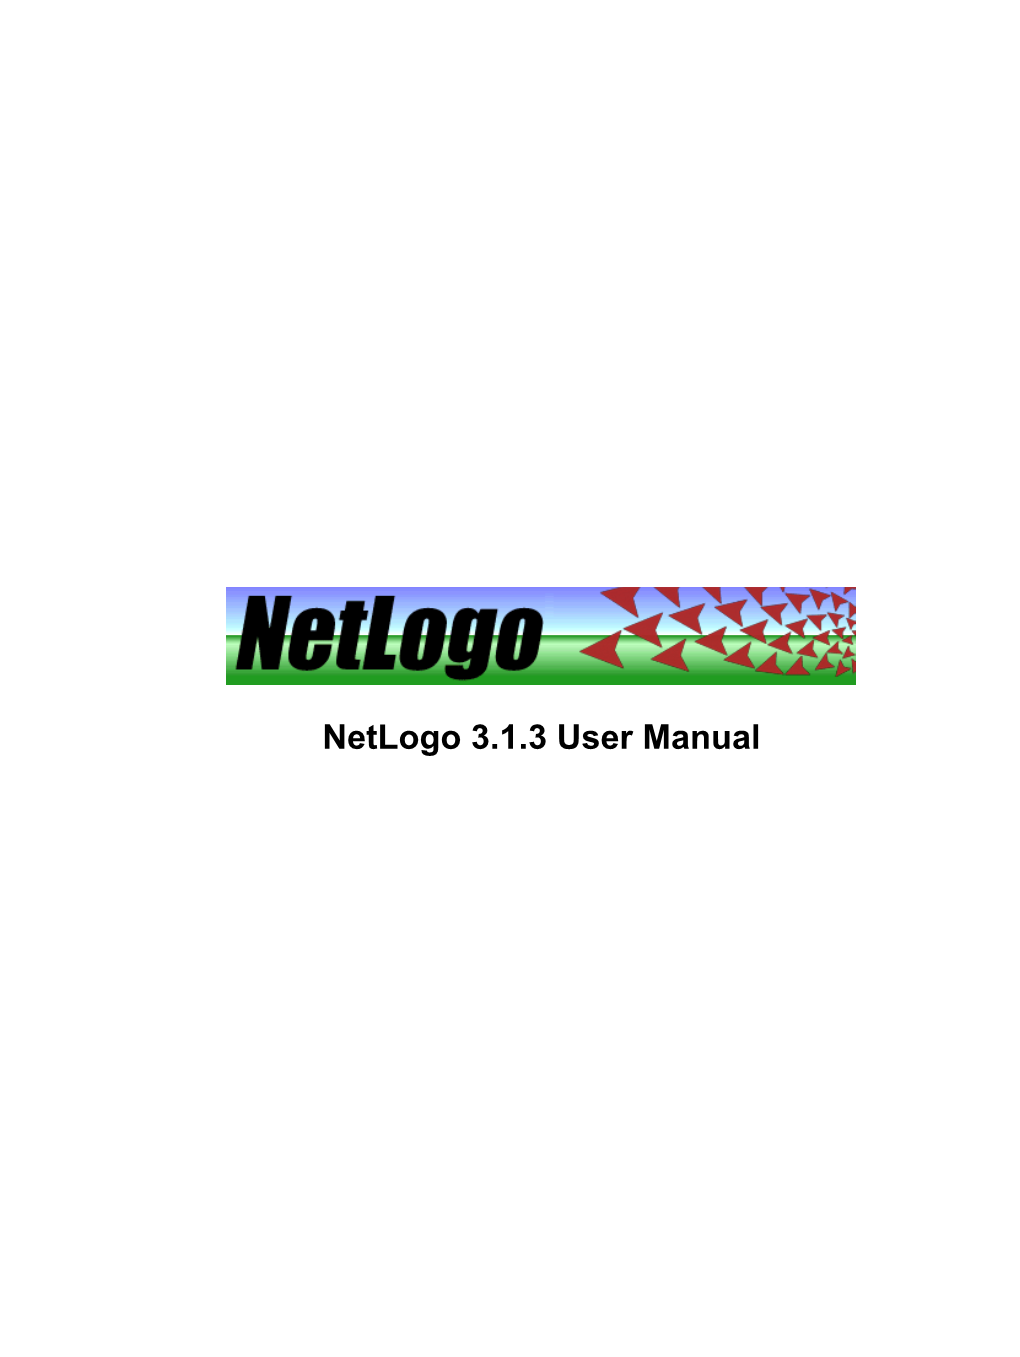 Netlogo 3.1.3 User Manual